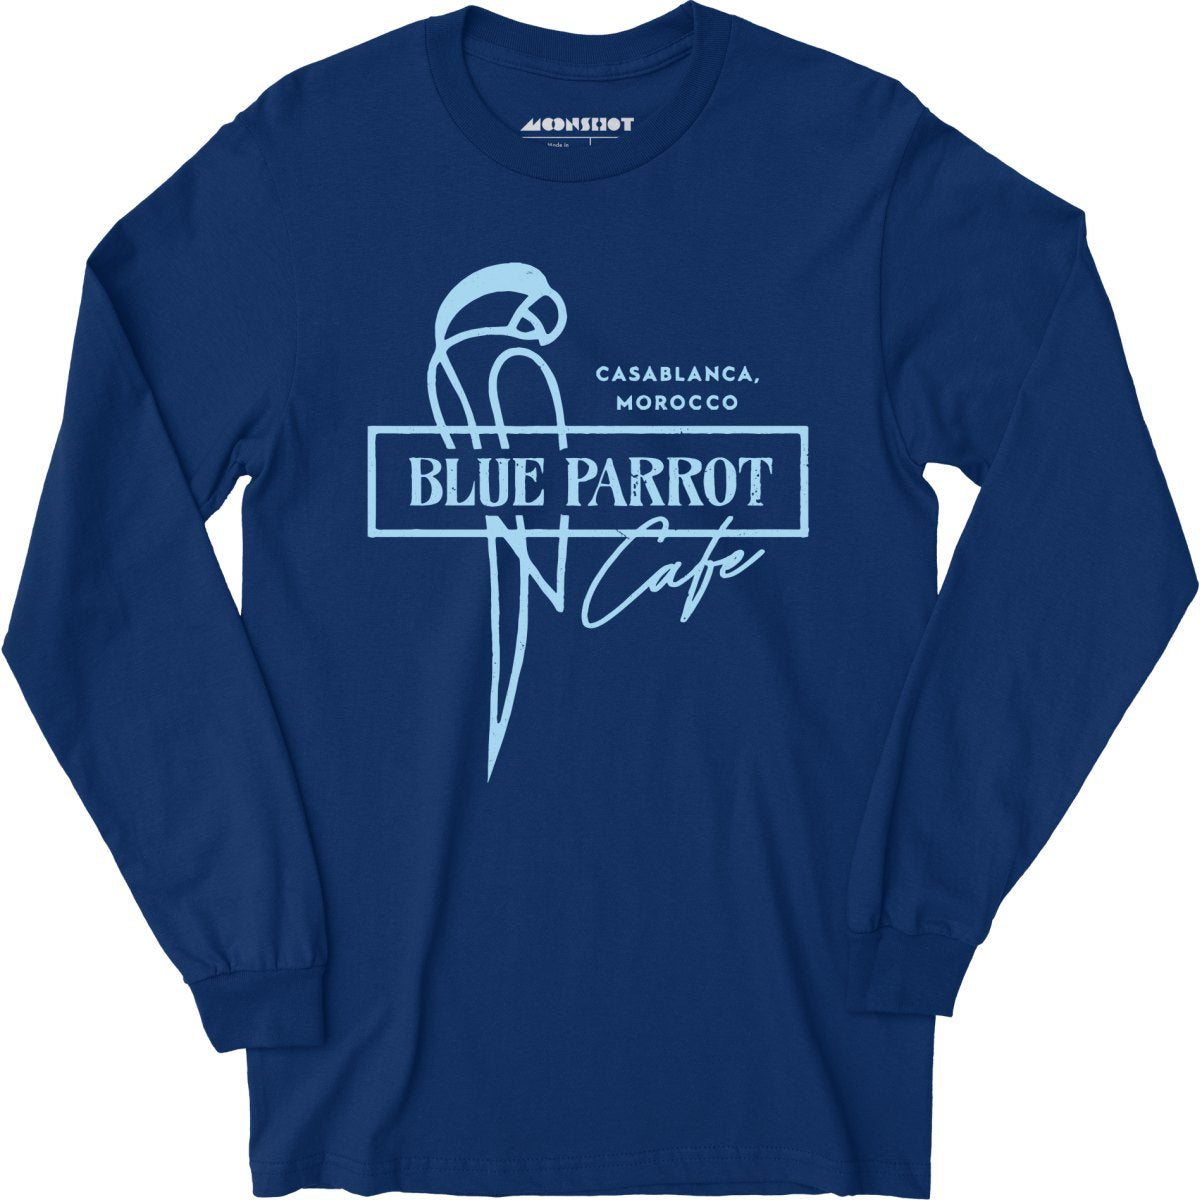 Casablanca - Blue Parrot Cafe - Long Sleeve T-Shirt